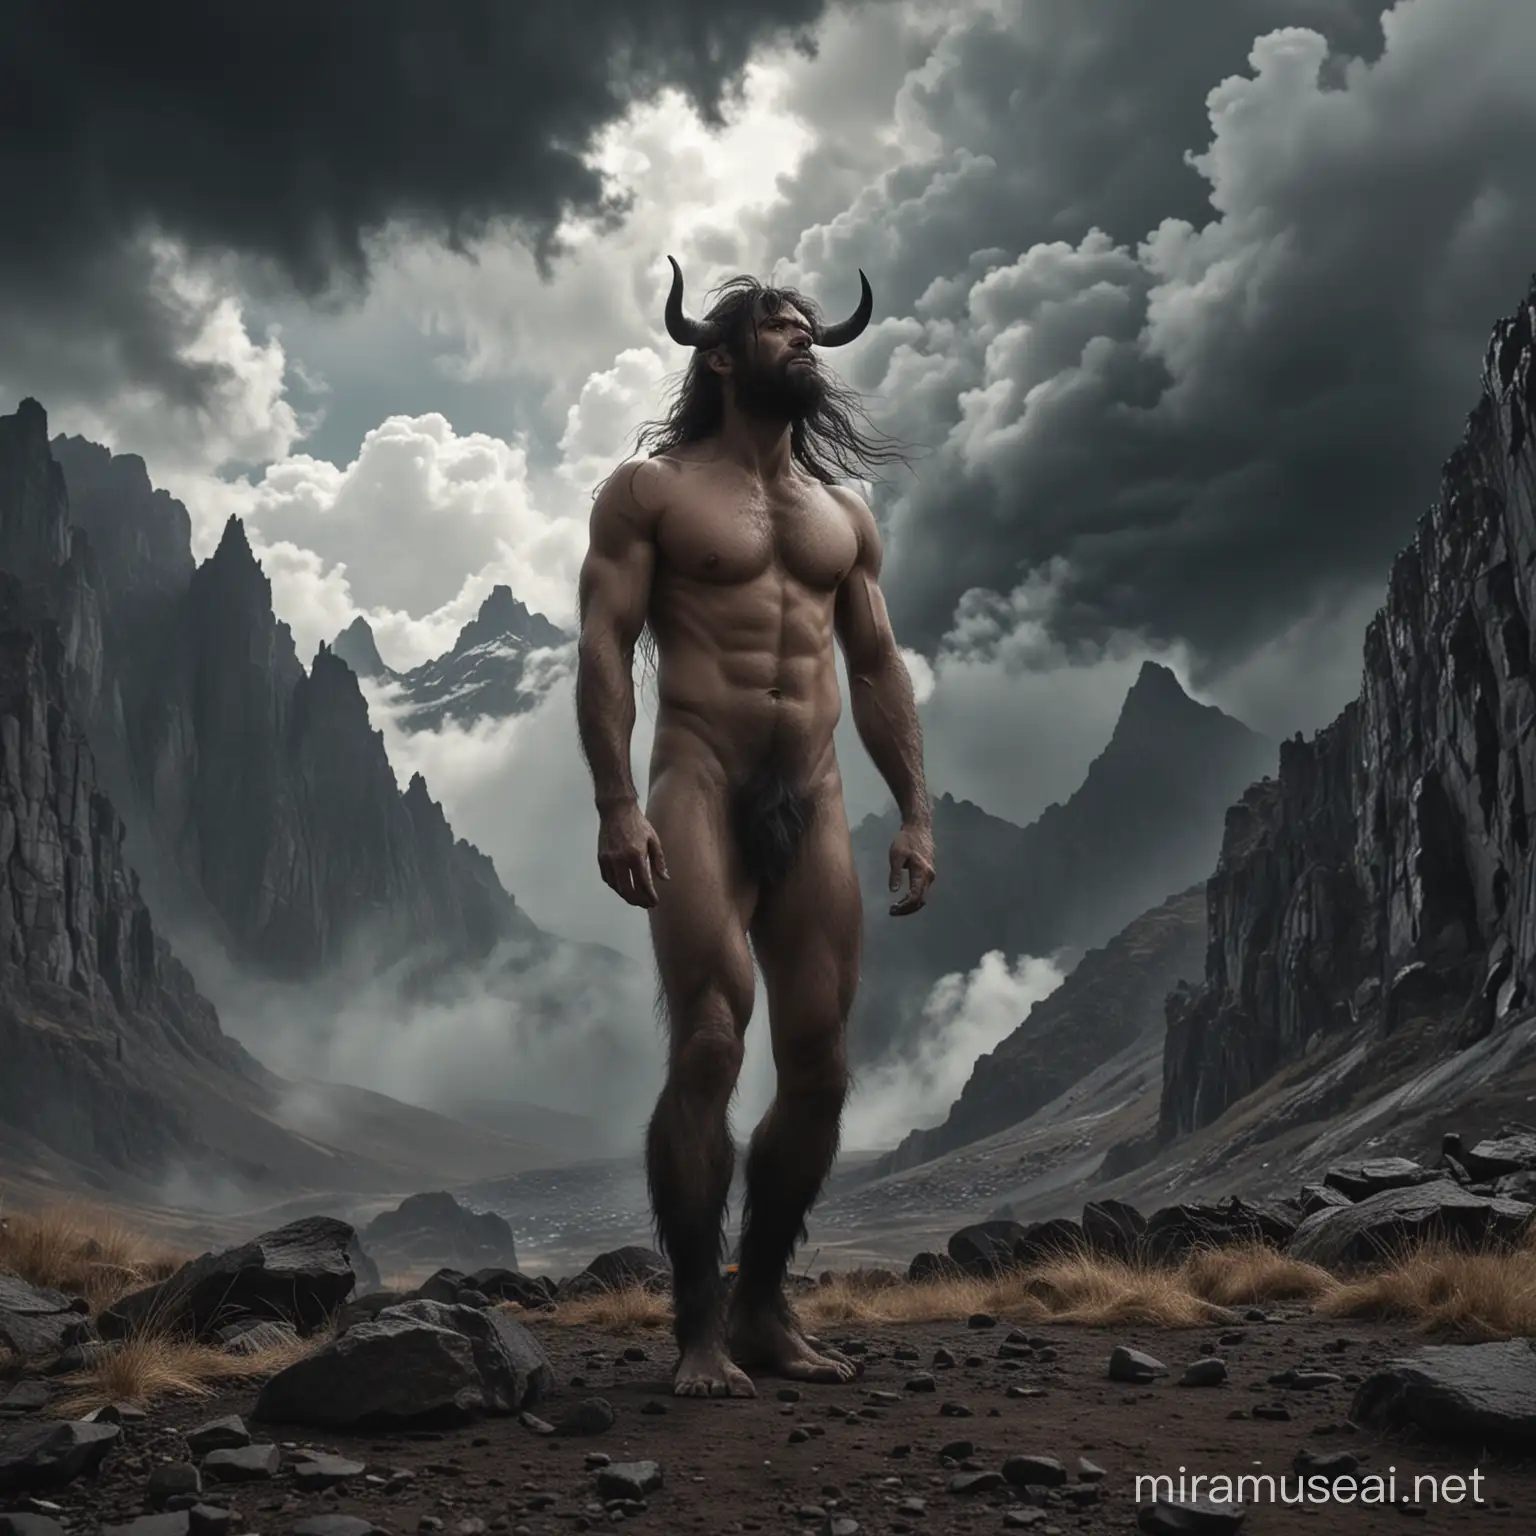 Terrified Horned Creature Gazes at Menacing Black Cloud in Mountain Landscape